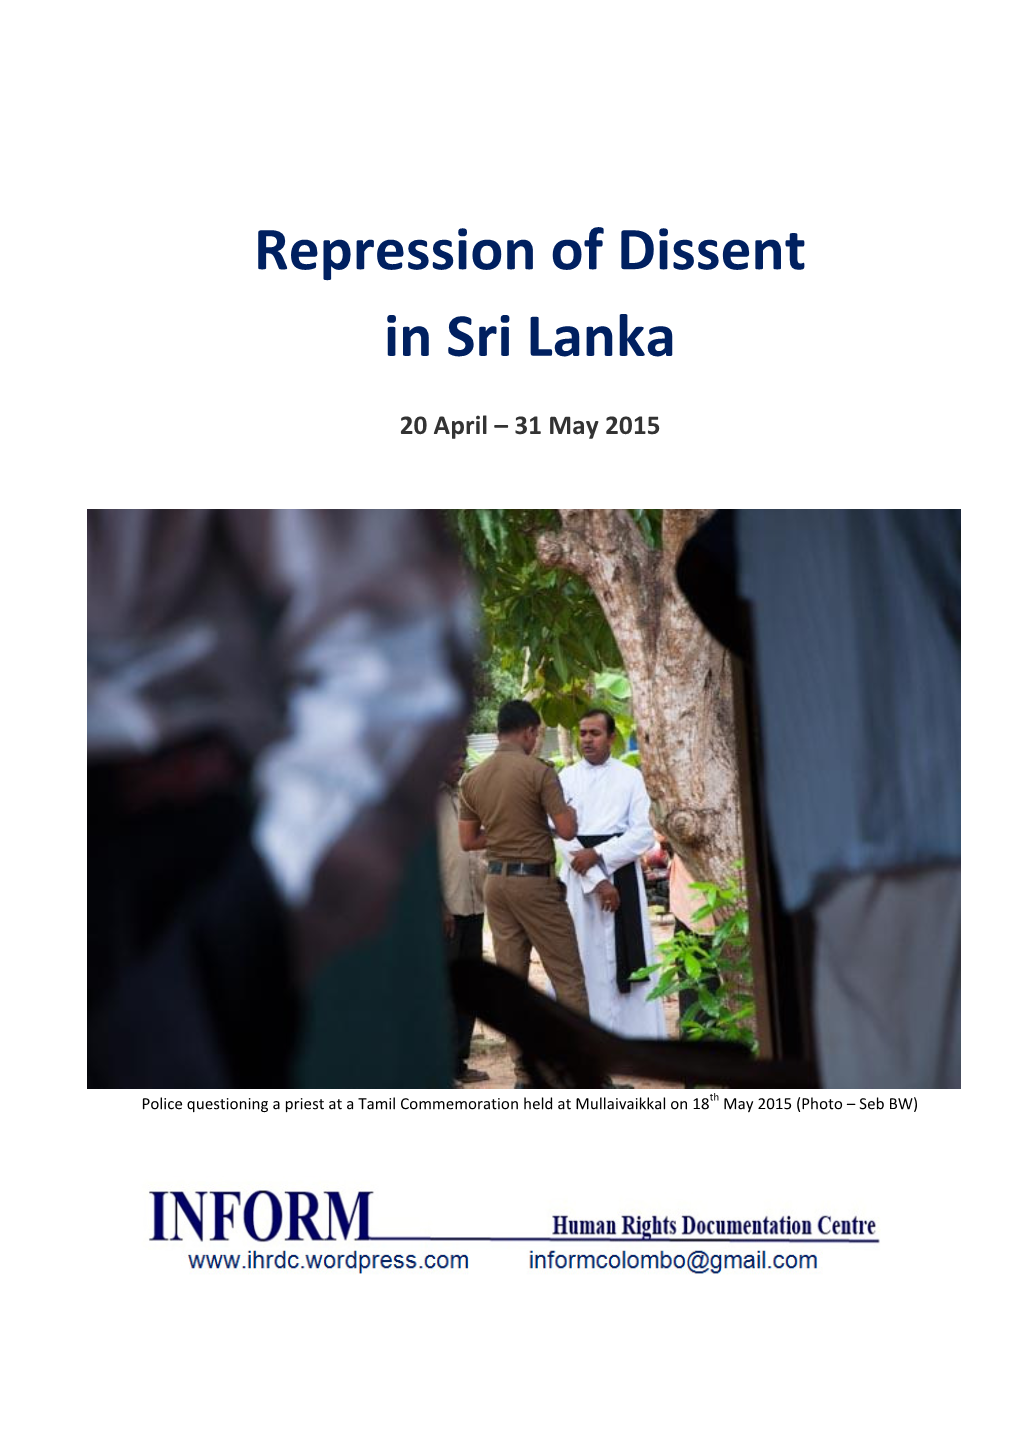 Repression of Dissent in Sri Lanka April 20 - 31 May 2014